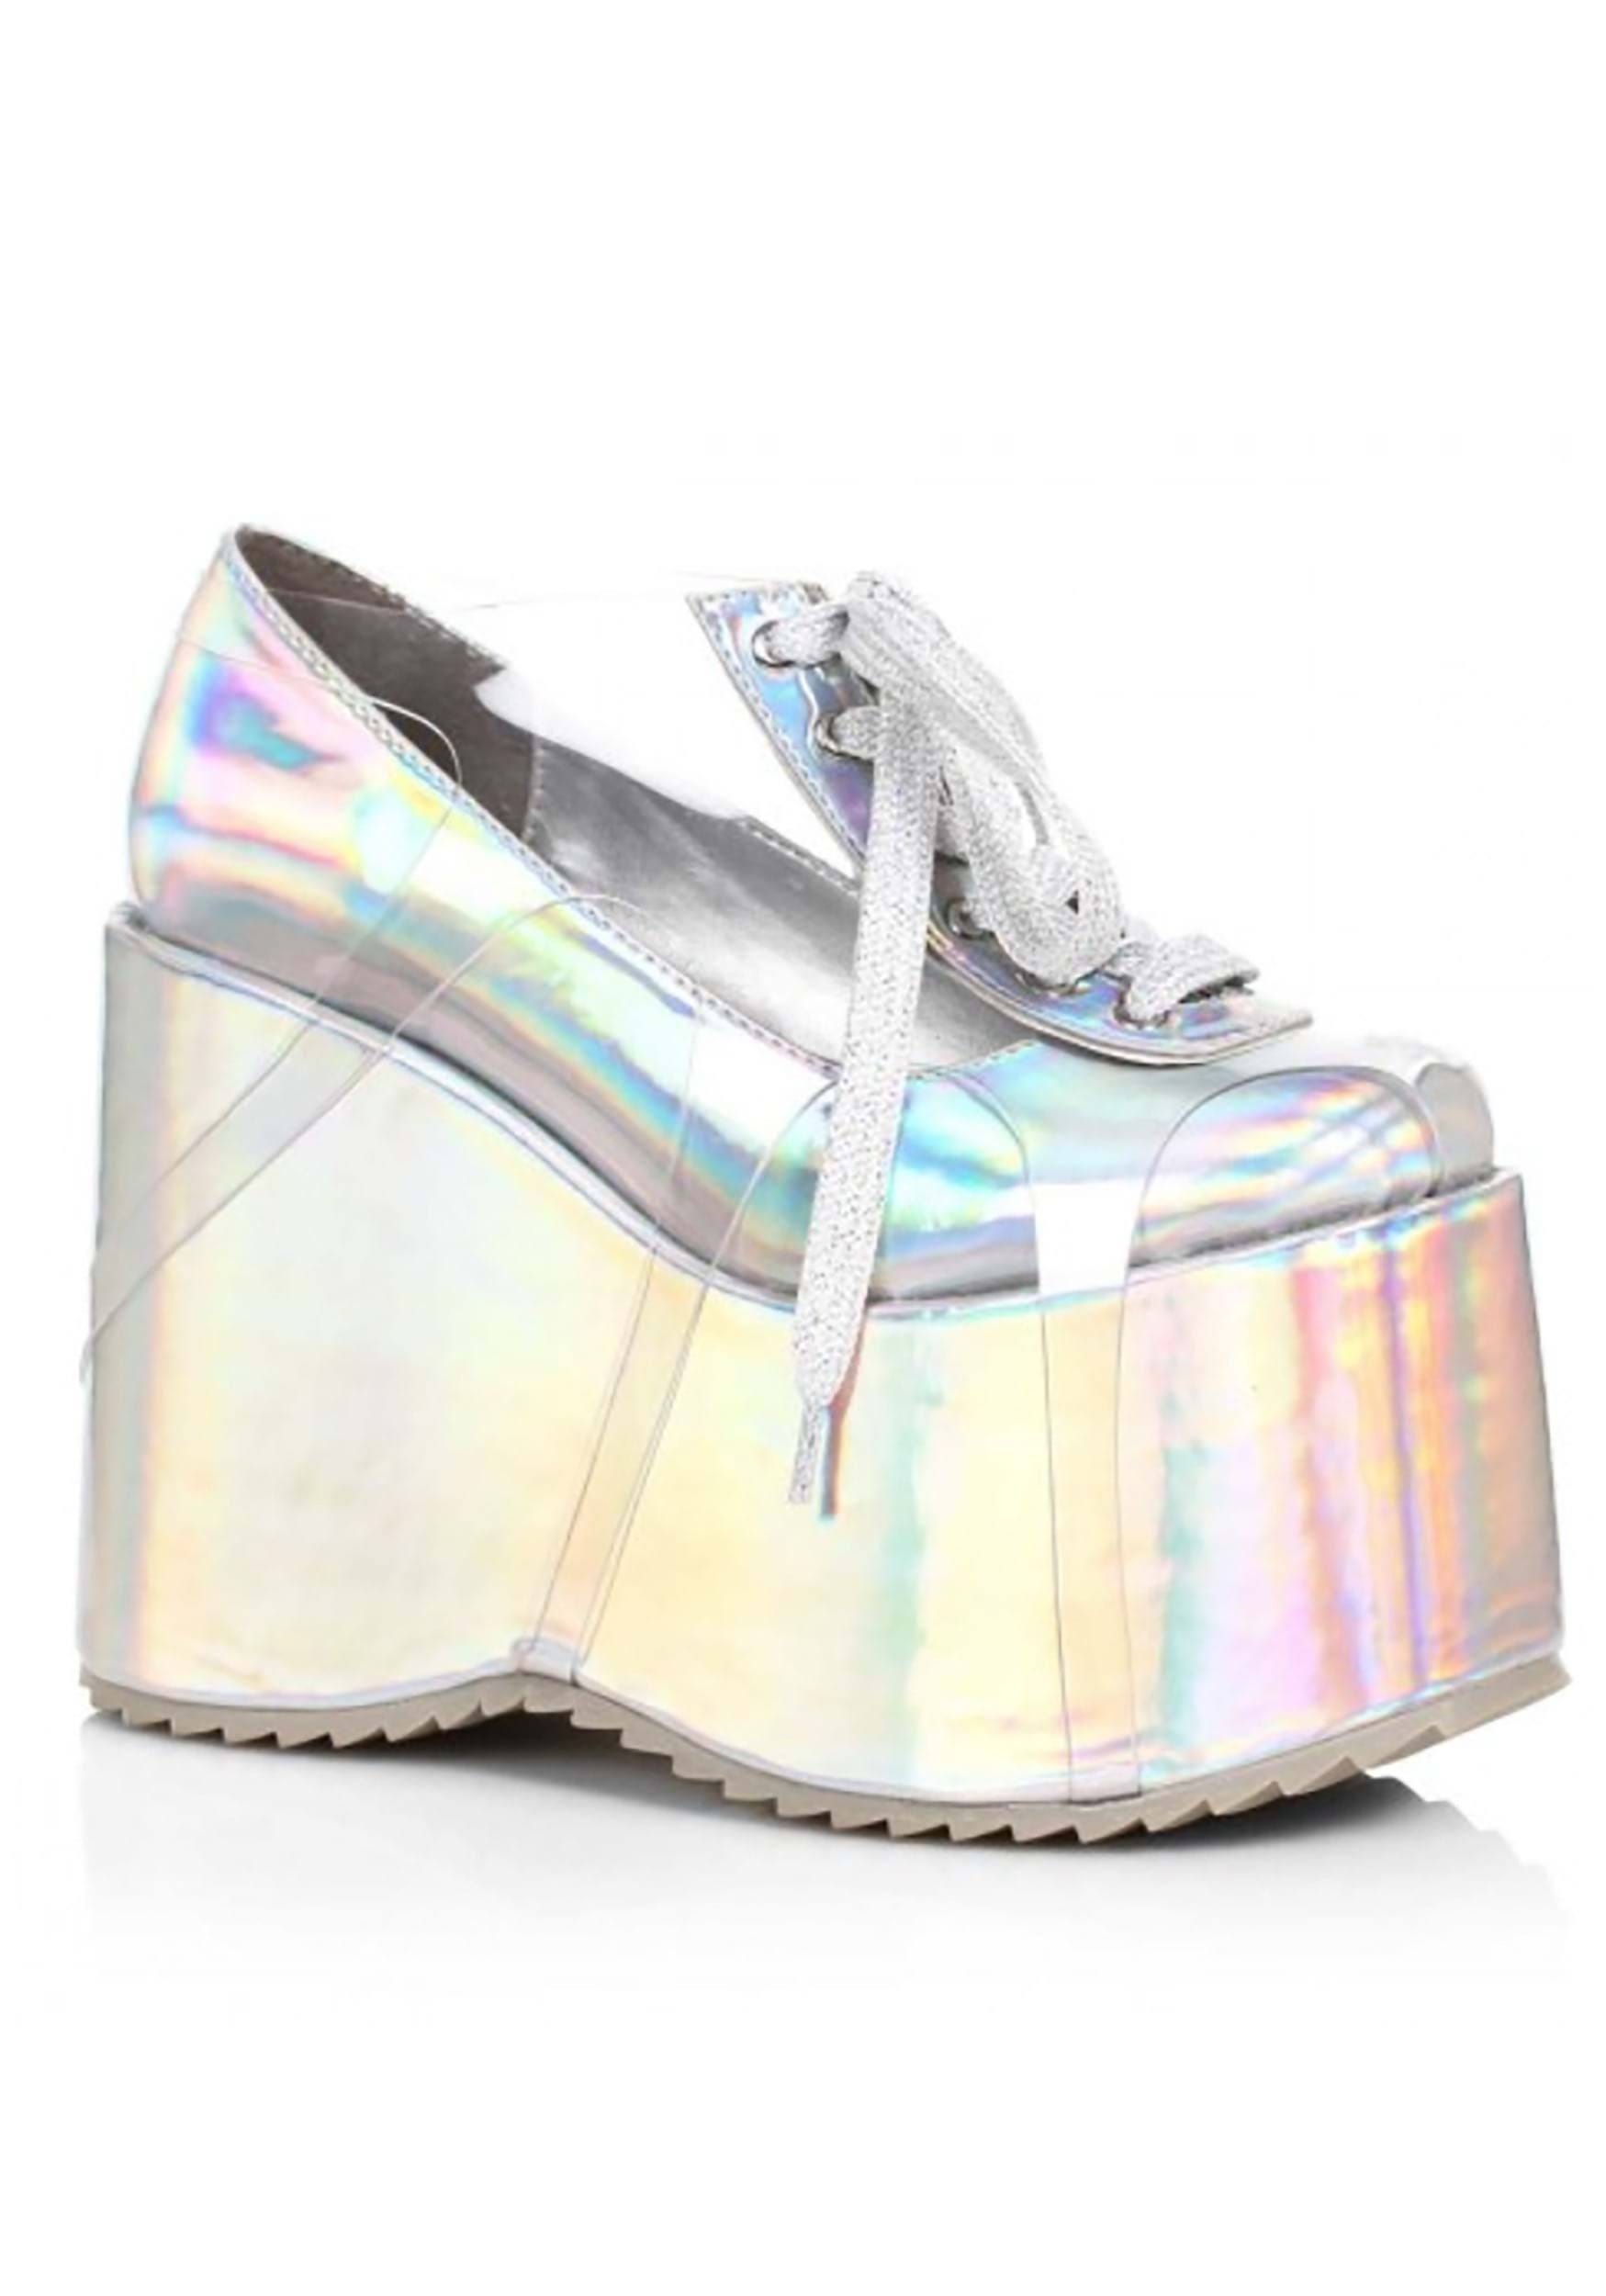 Twinkle Toes: Hologram Platform Shoes for Stylish Ladies | Image